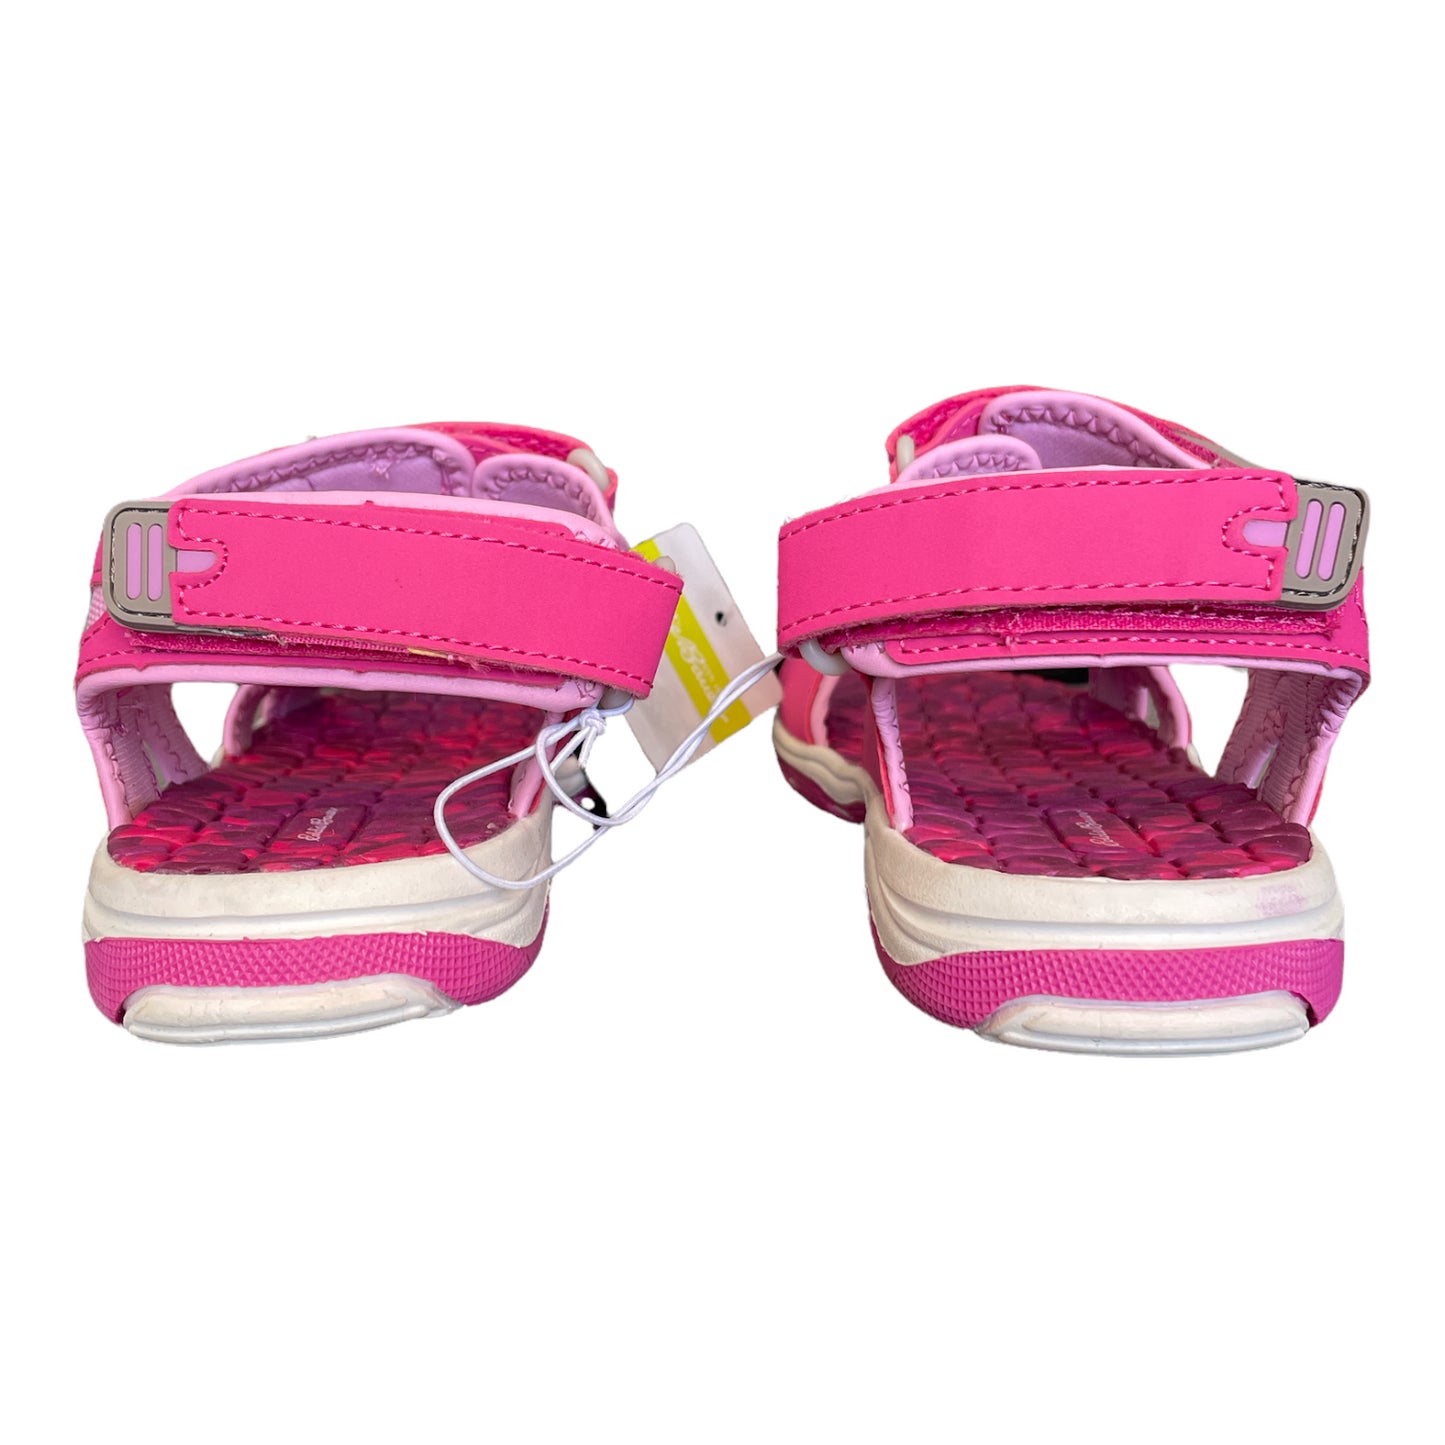 Eddie Bauer Big Girl's Adjustable Strap River Sandal, Hot Pink Tie-Dye